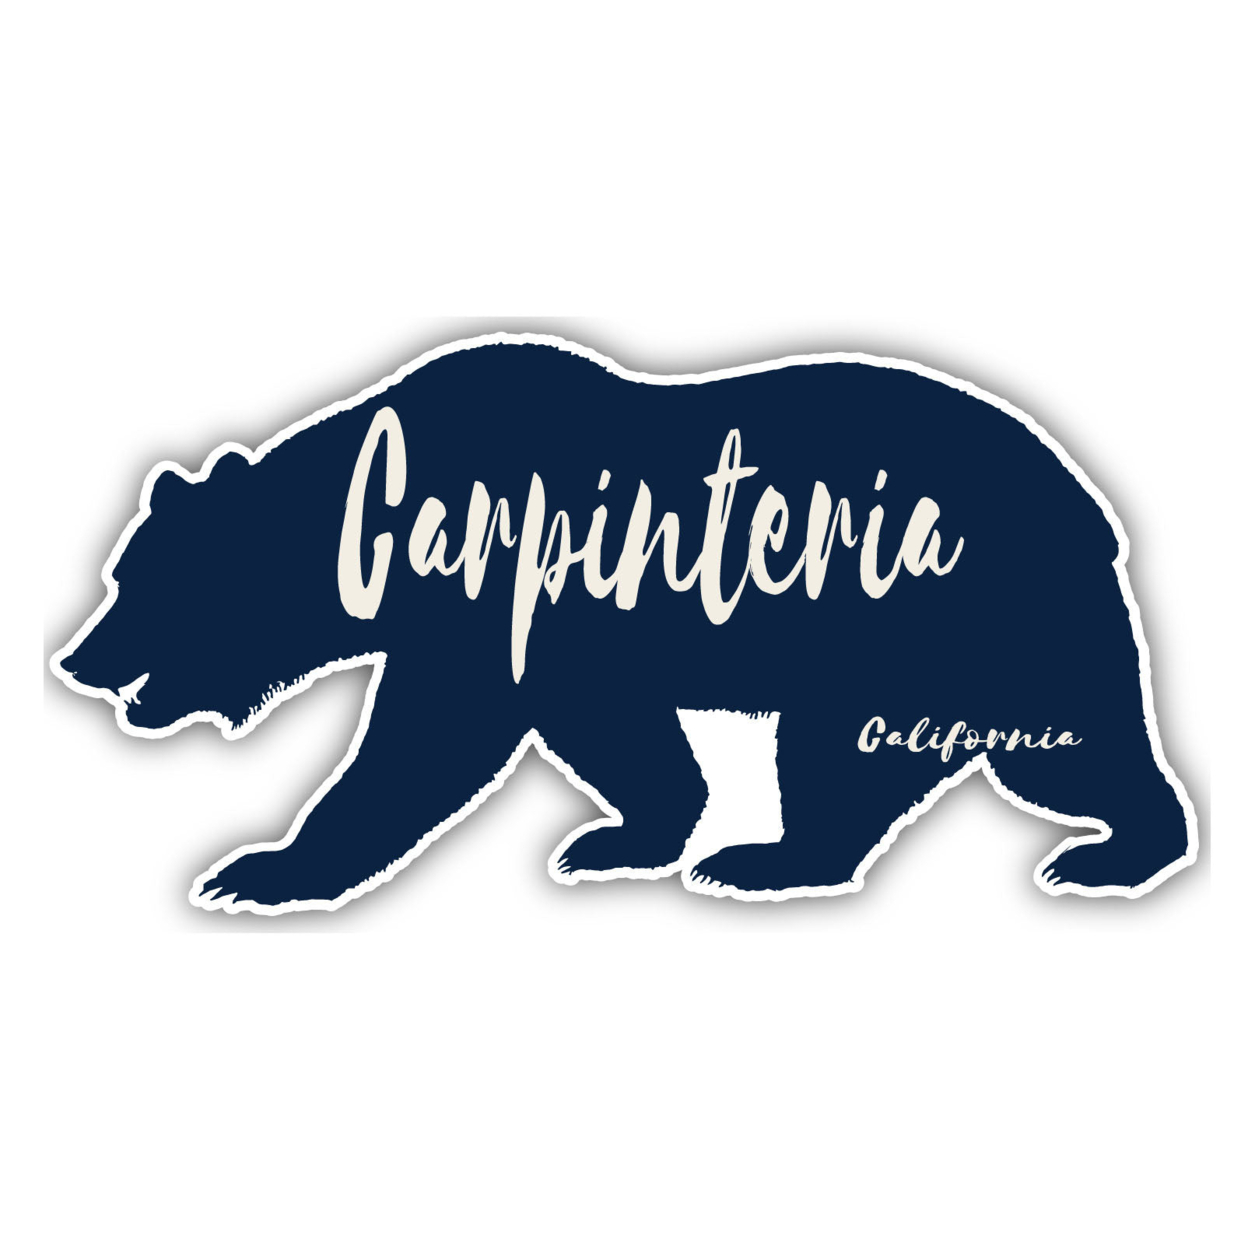 Carpinteria California Souvenir Decorative Stickers (Choose Theme And Size) - 4-Pack, 6-Inch, Bear